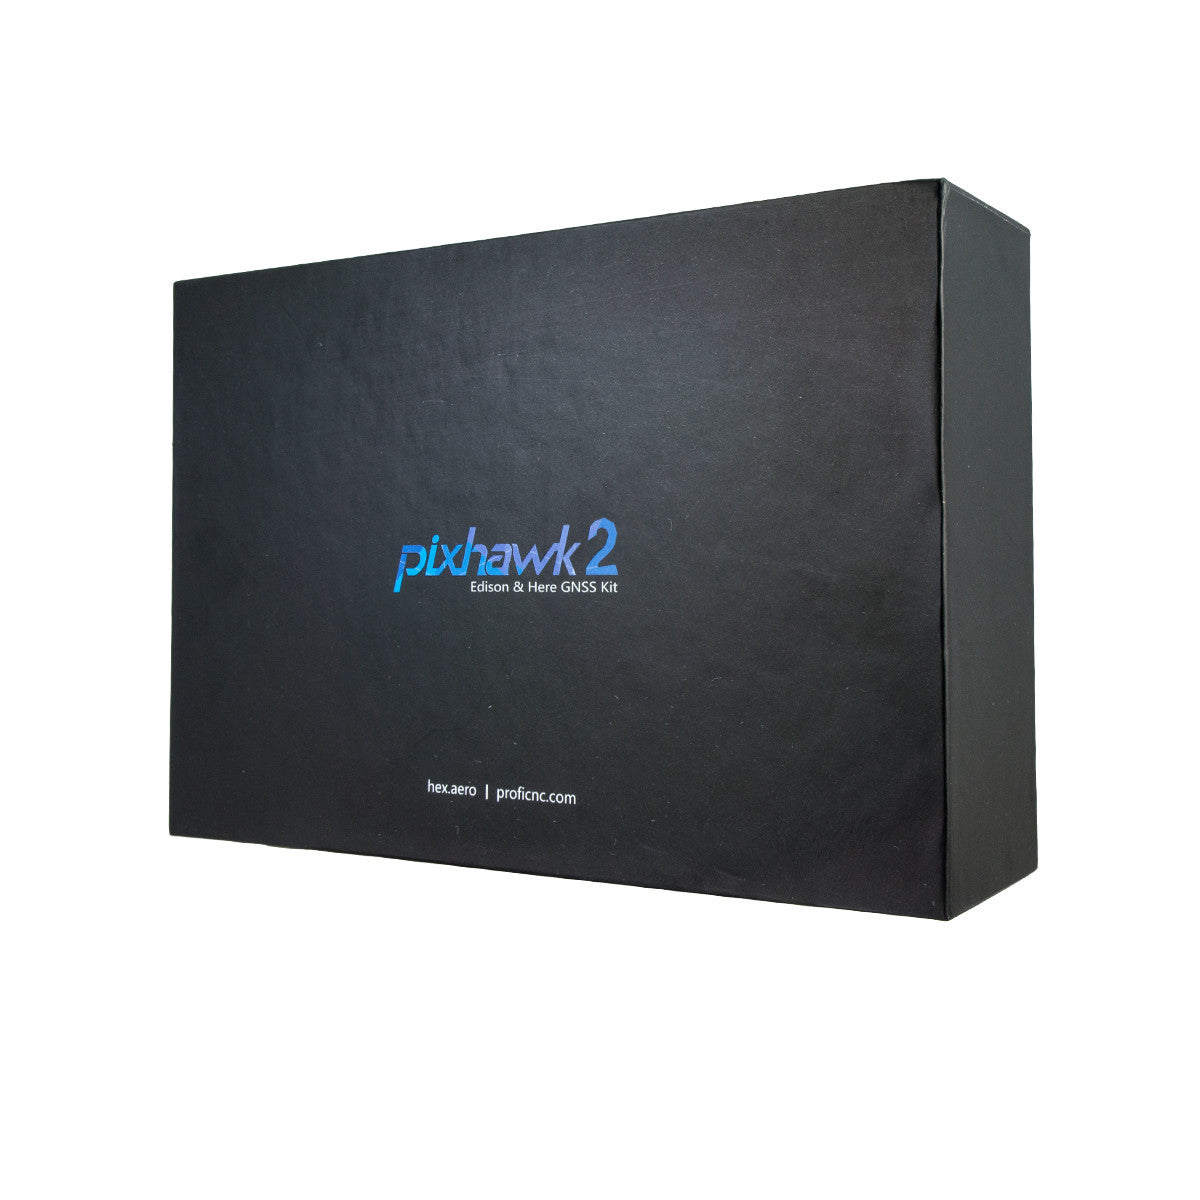 Pixhawk2.1 Edison & Here GPS Kit